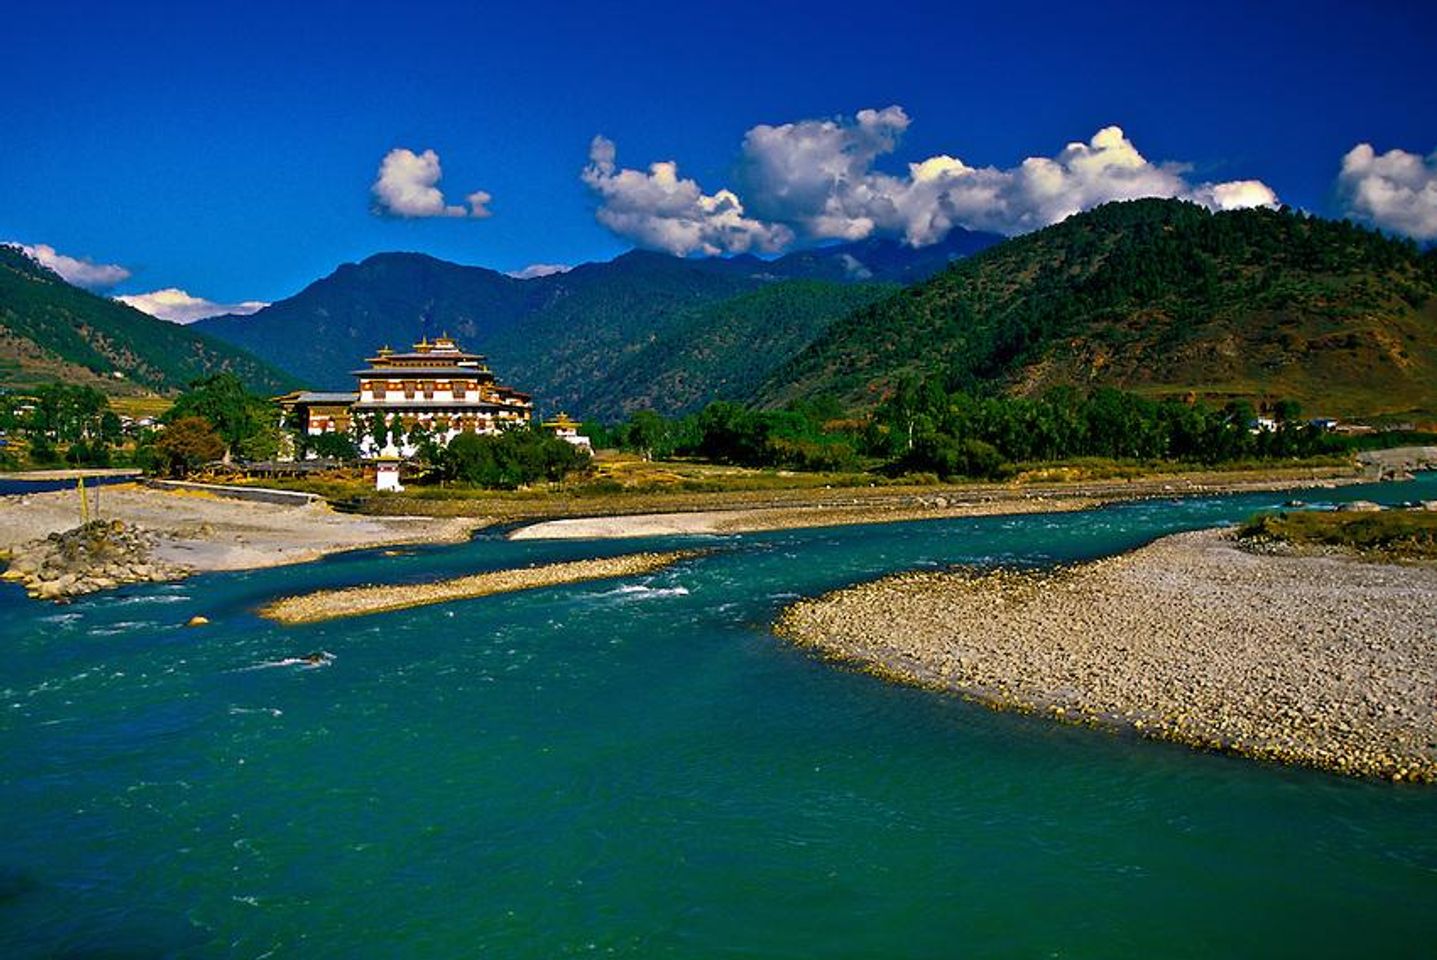 Desata tu explorador interior en el Dzong de Punakha: la histórica fortaleza de piedra de Bután.